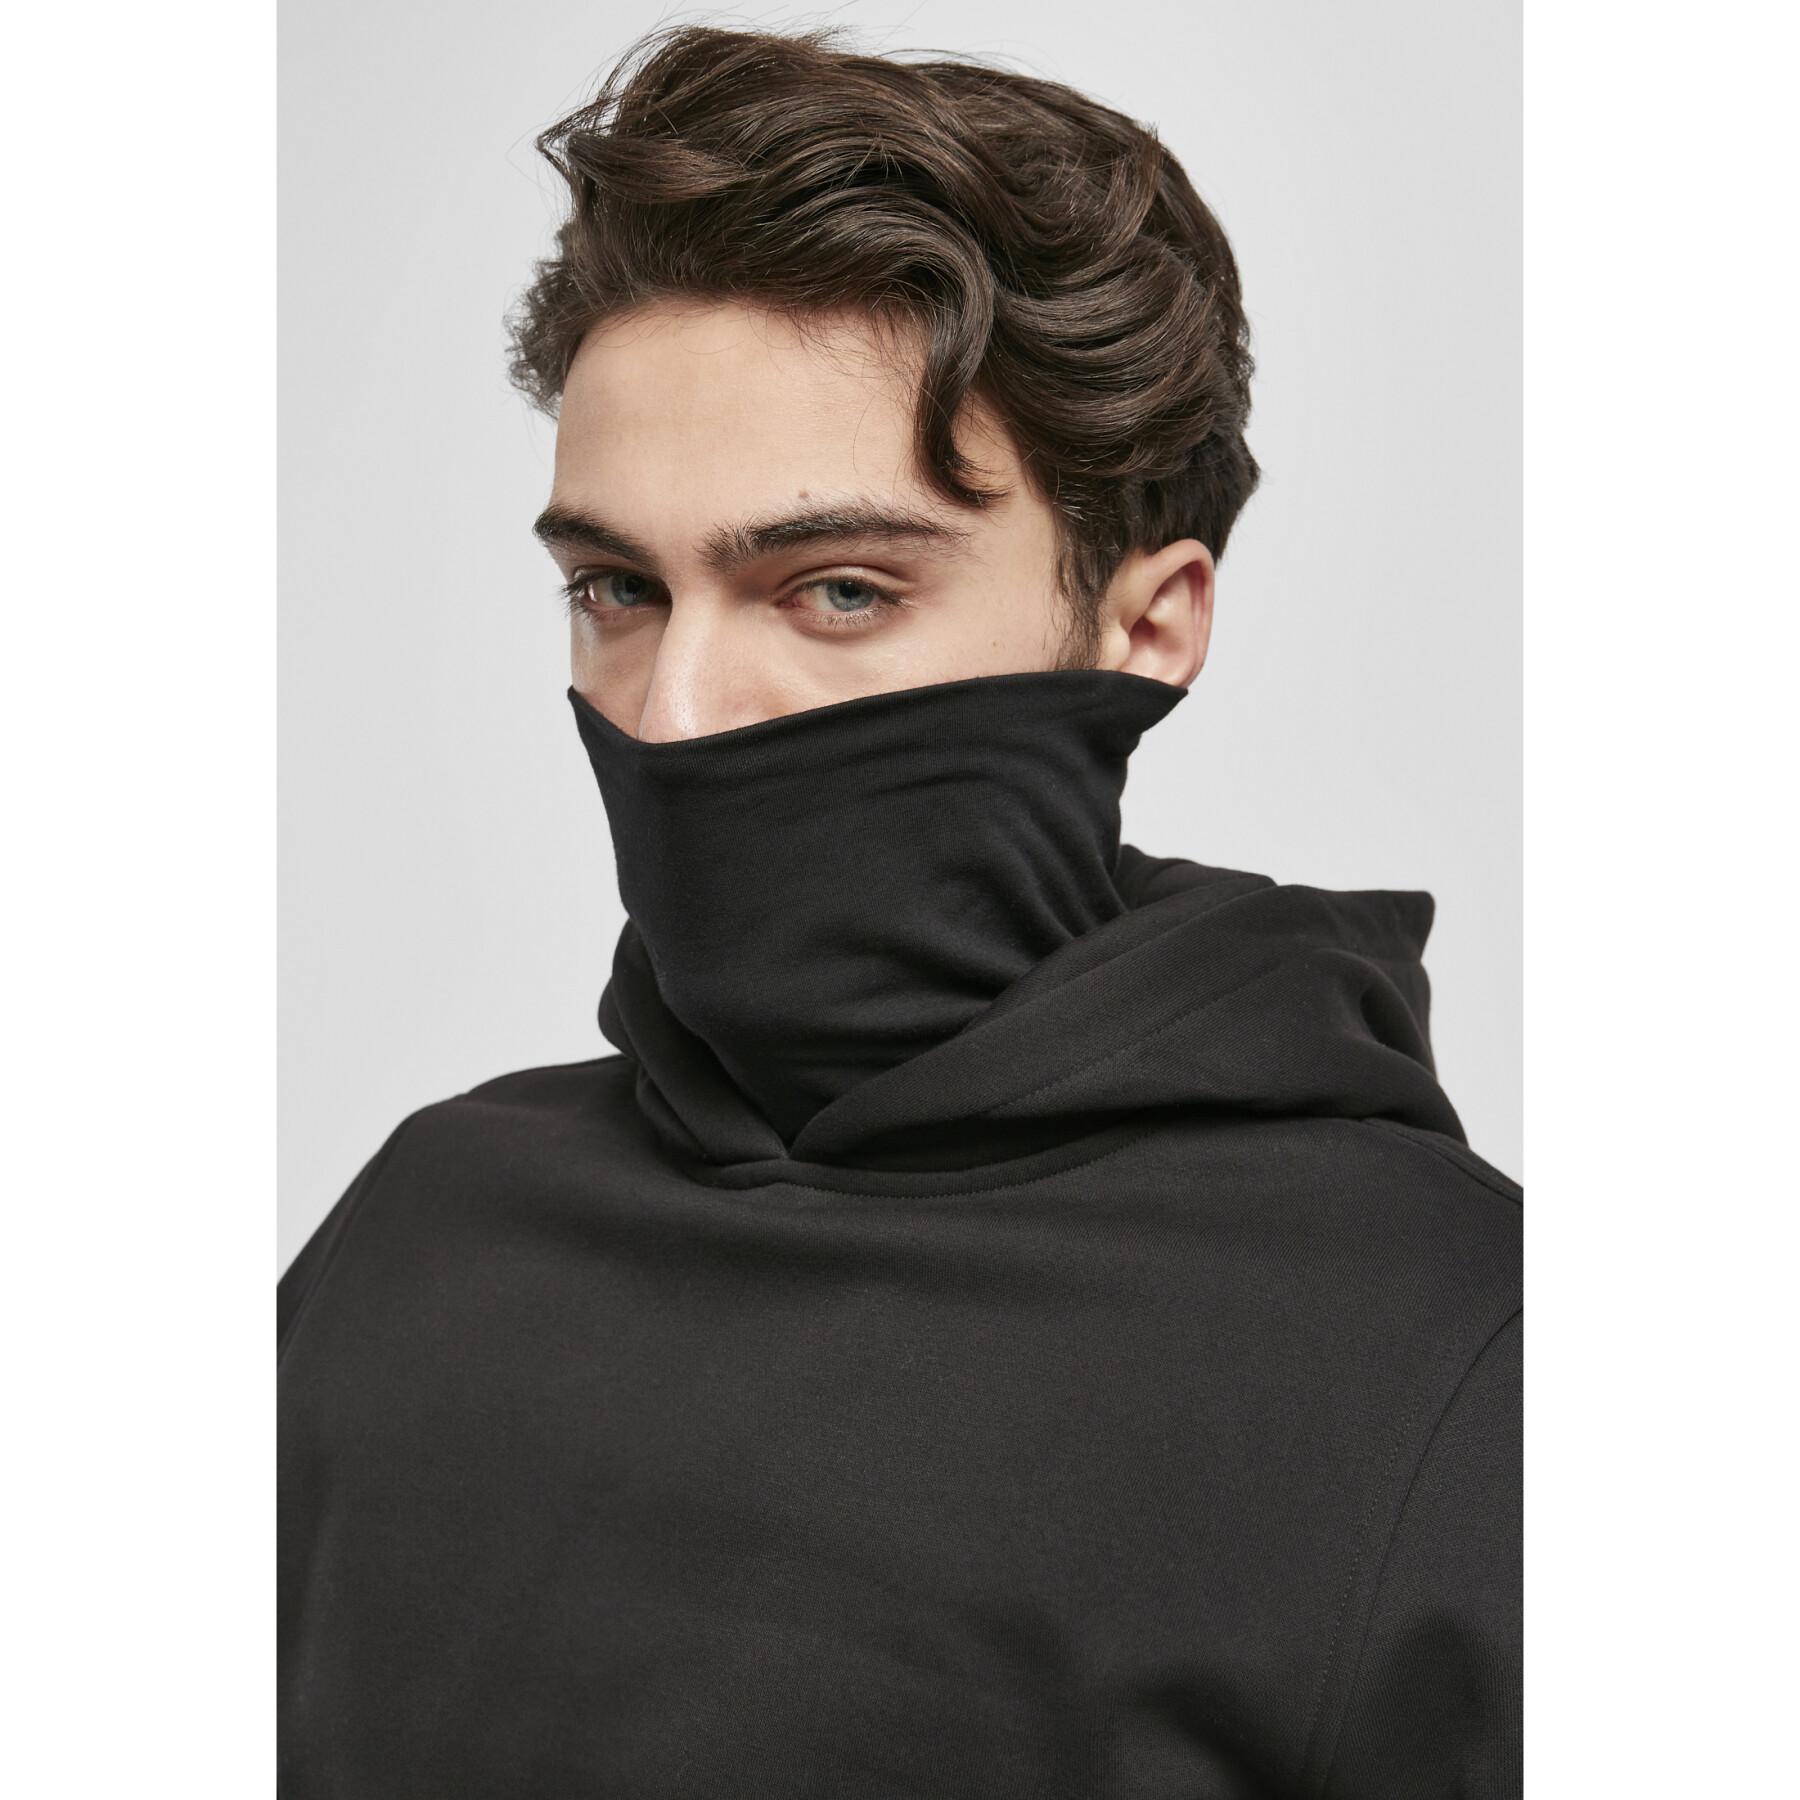 Hooded sweatshirt Urban Classics face mask